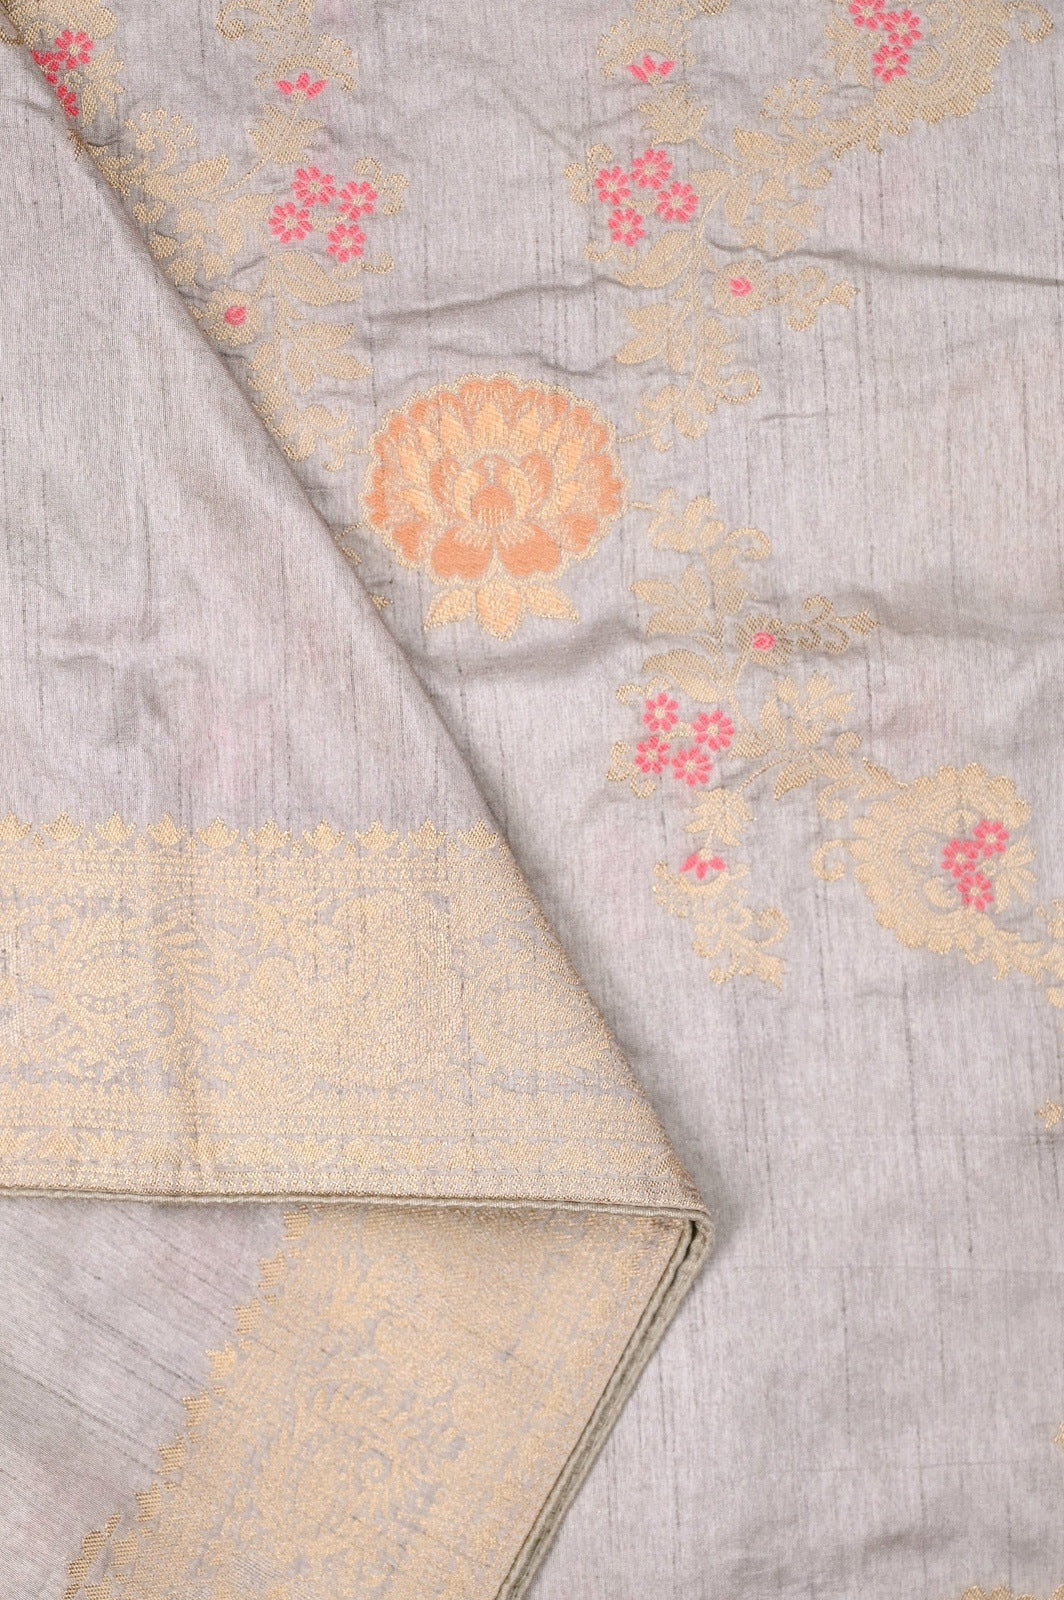 Dola silk saree ash color with allover meenakari work, rich pallu, small zari border and running plain blouse.